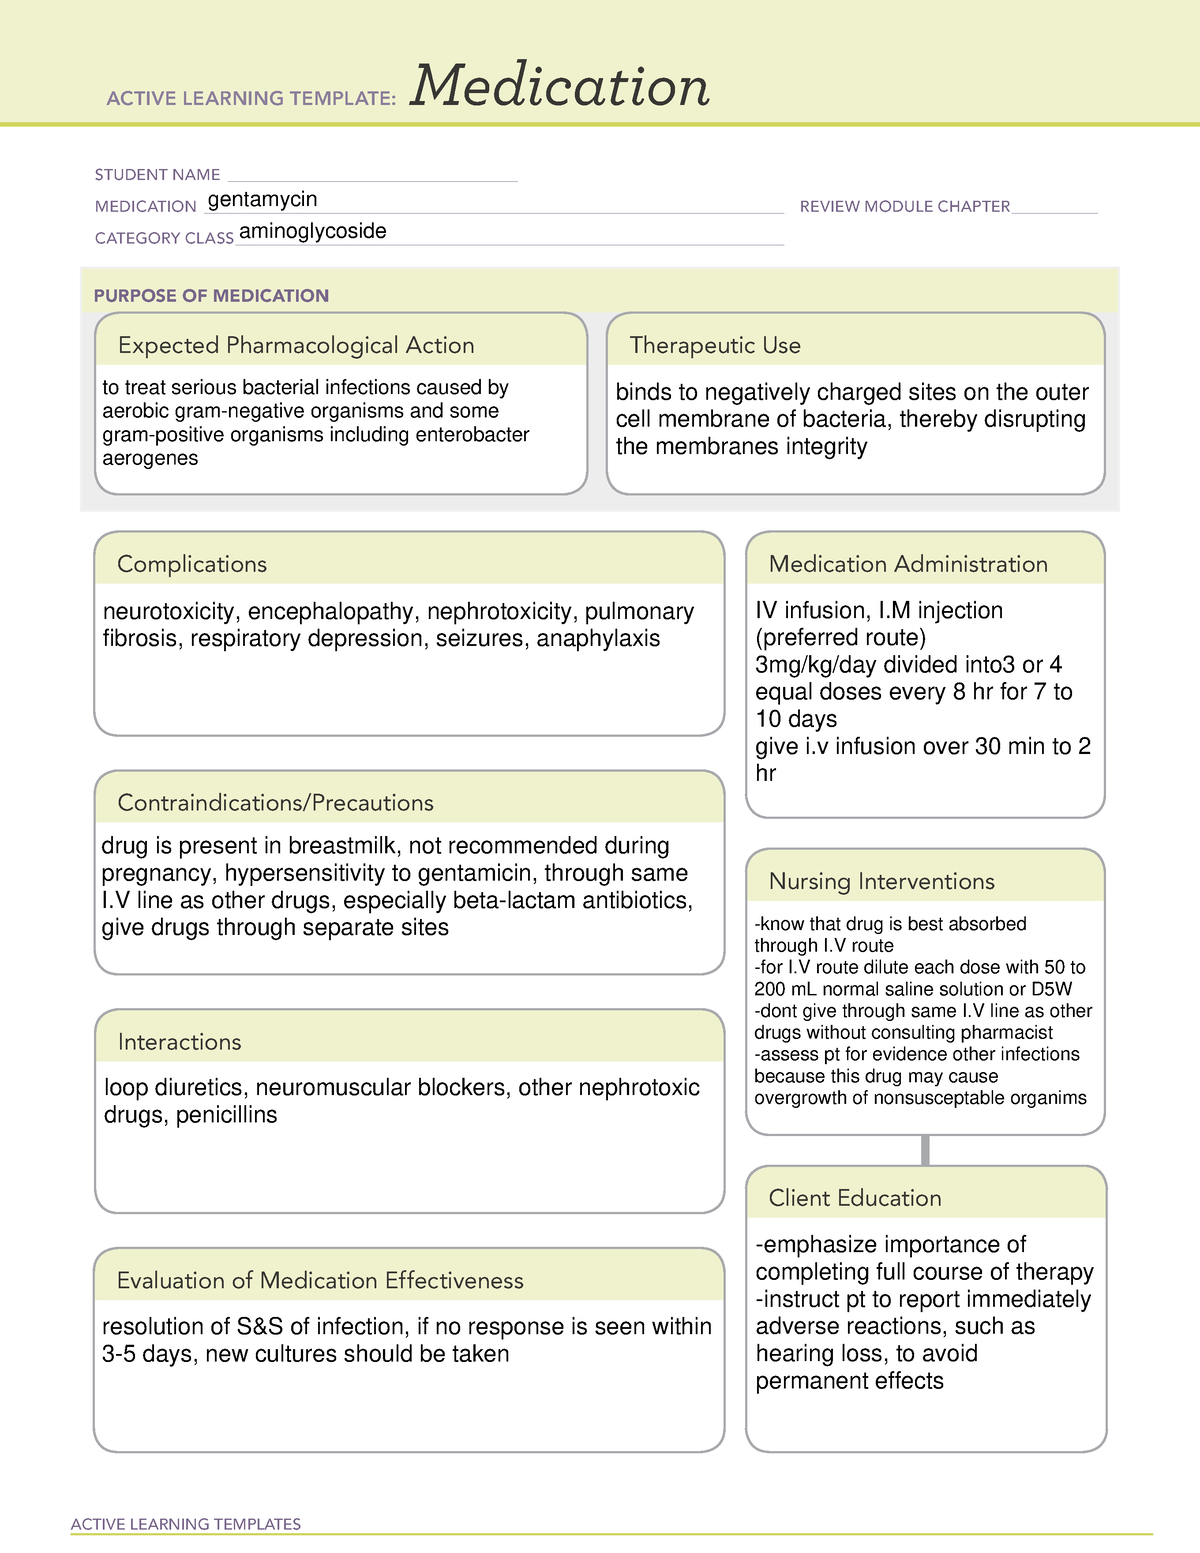 medication-template-ati-gentamycin-active-learning-templates-medication-student-name-studocu